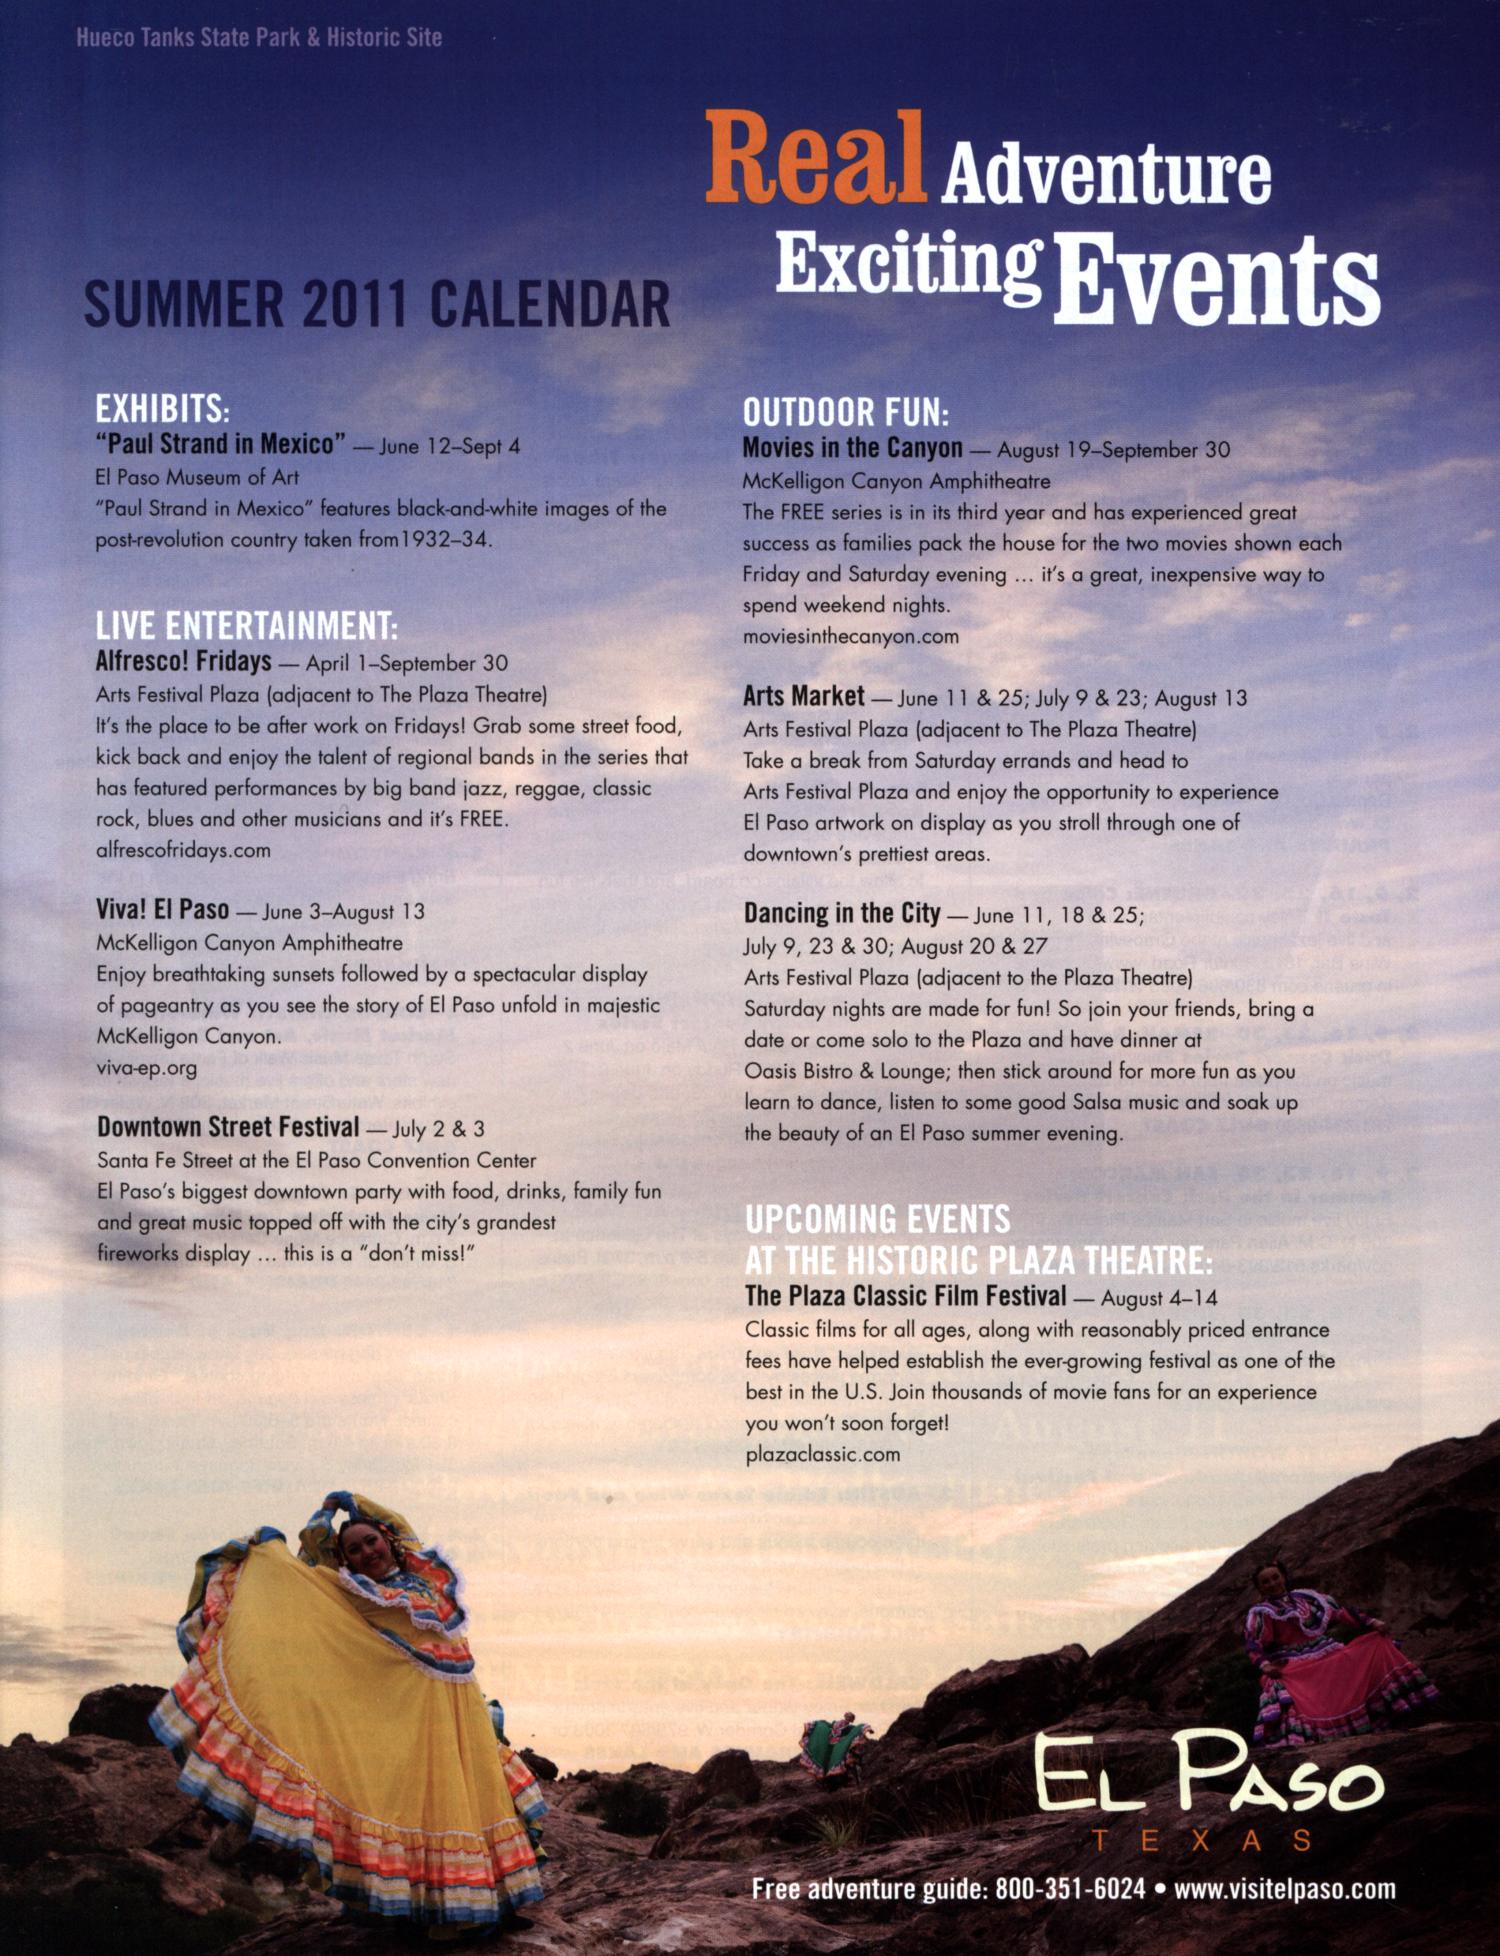 Texas Events Calendar, Summer 2011
                                                
                                                    7
                                                